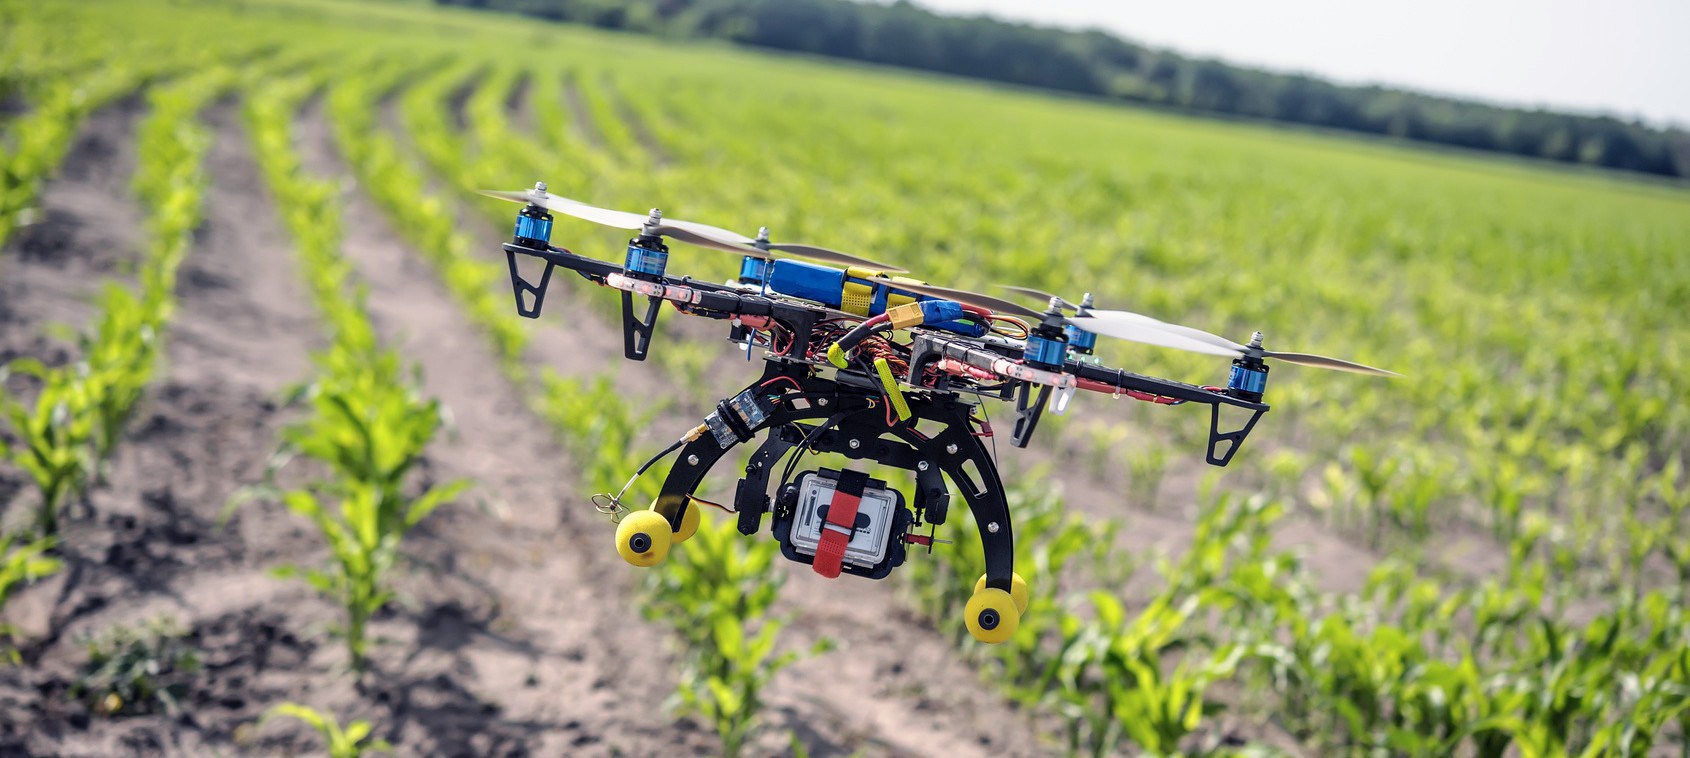 droni-in-agricoltura-banner.jpg